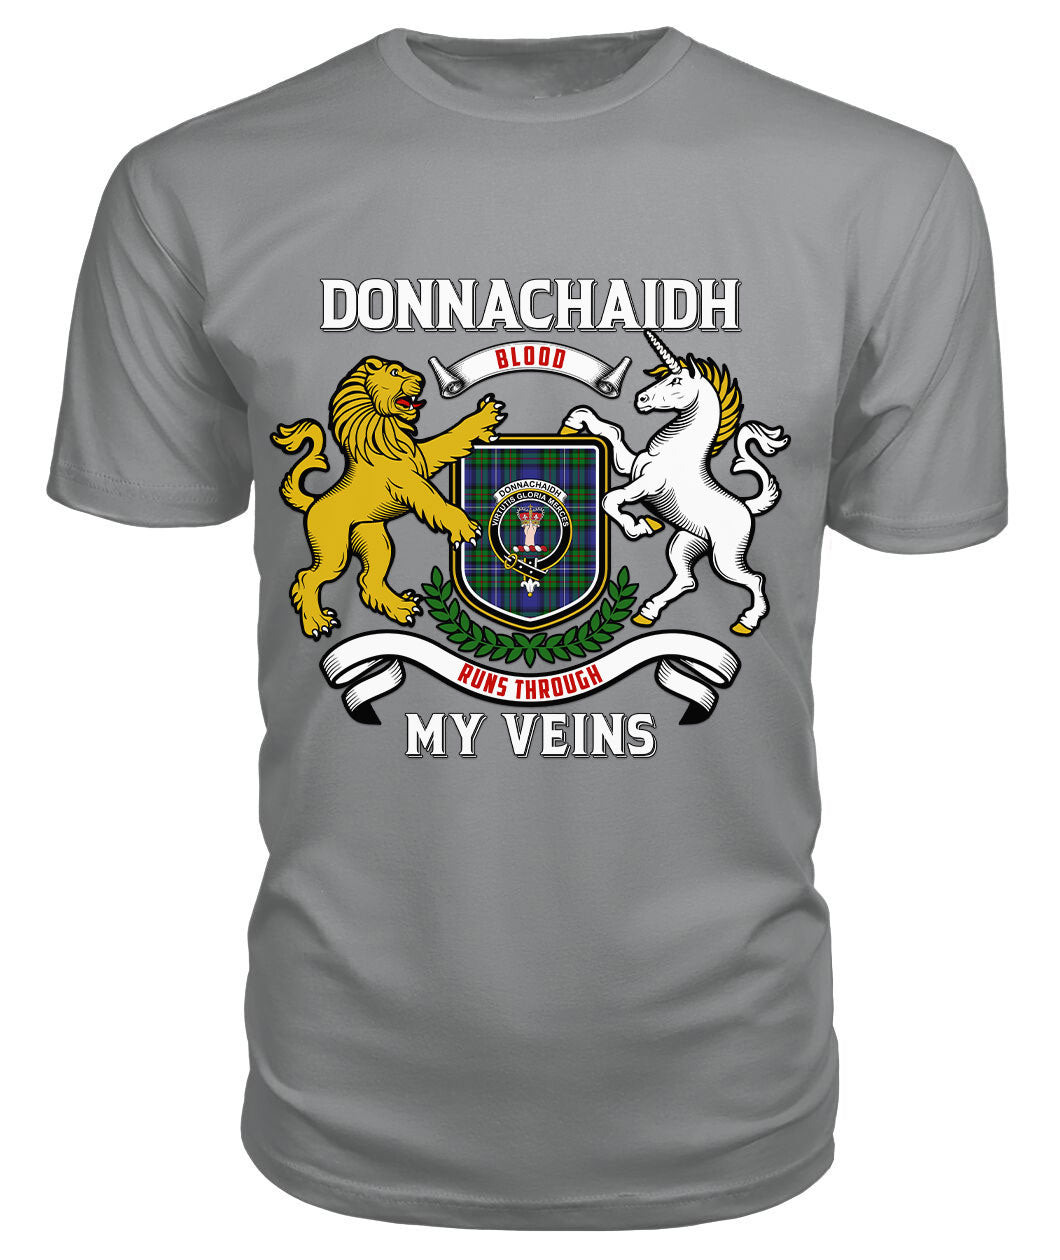 Donnachaidh Tartan Crest 2D T-shirt - Blood Runs Through My Veins Style